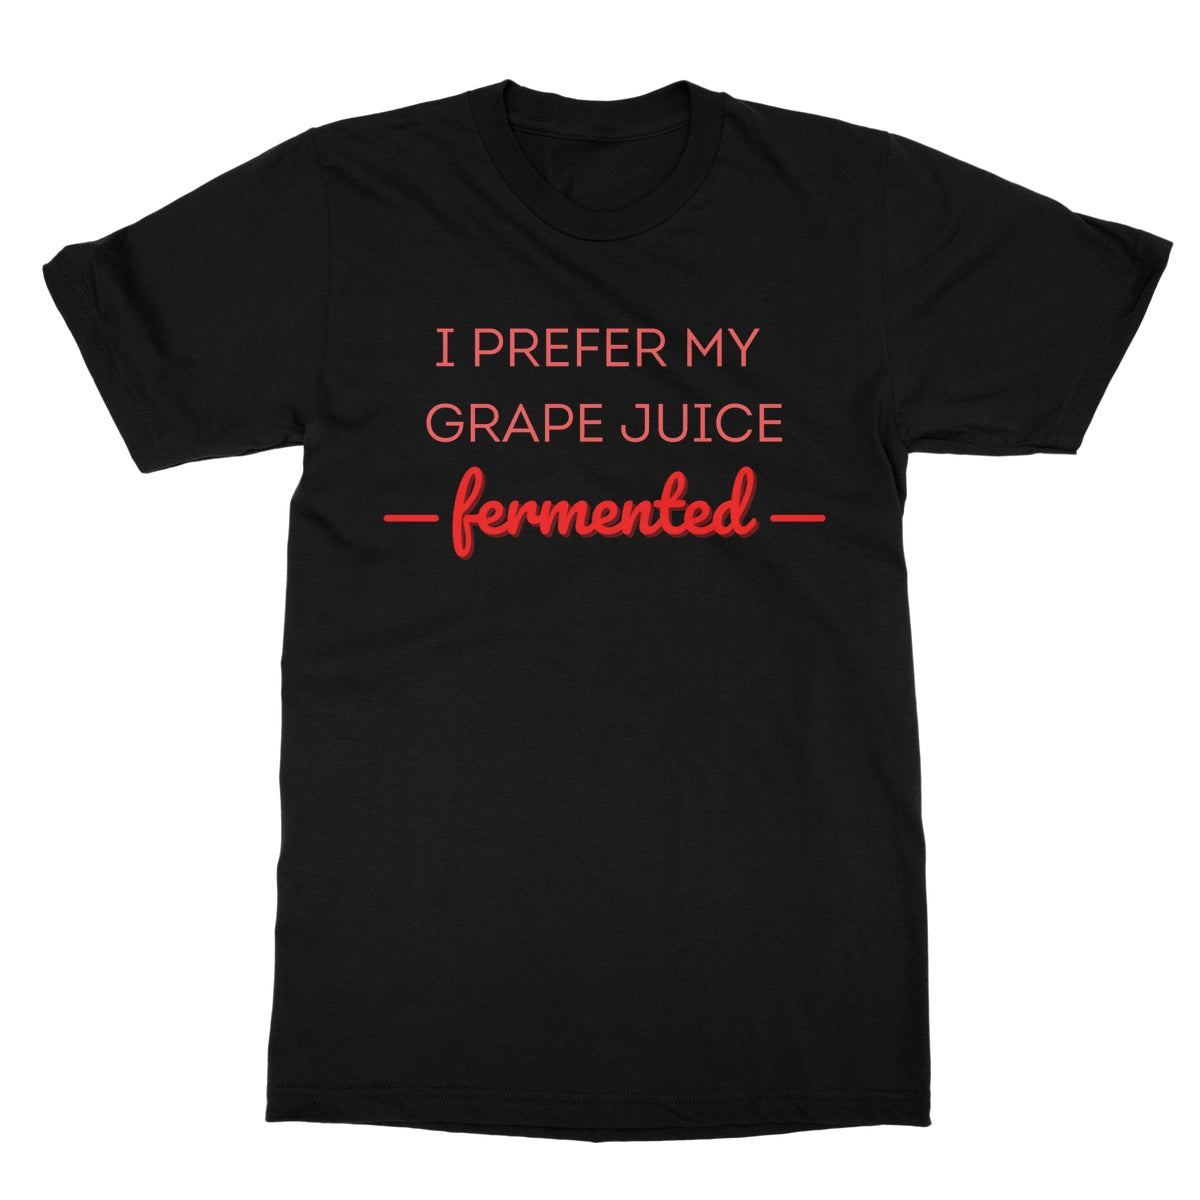 I prefer my grape juice fermented t shirt black